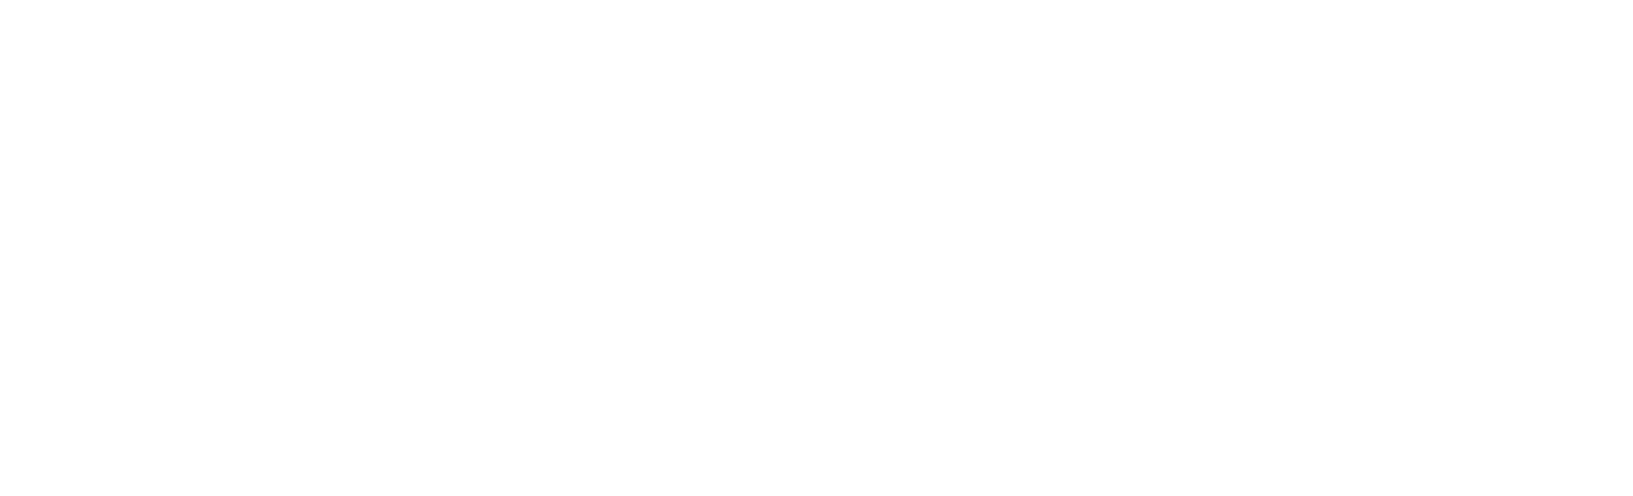 Sphero Logo - Sphero Support and Knowledge Base